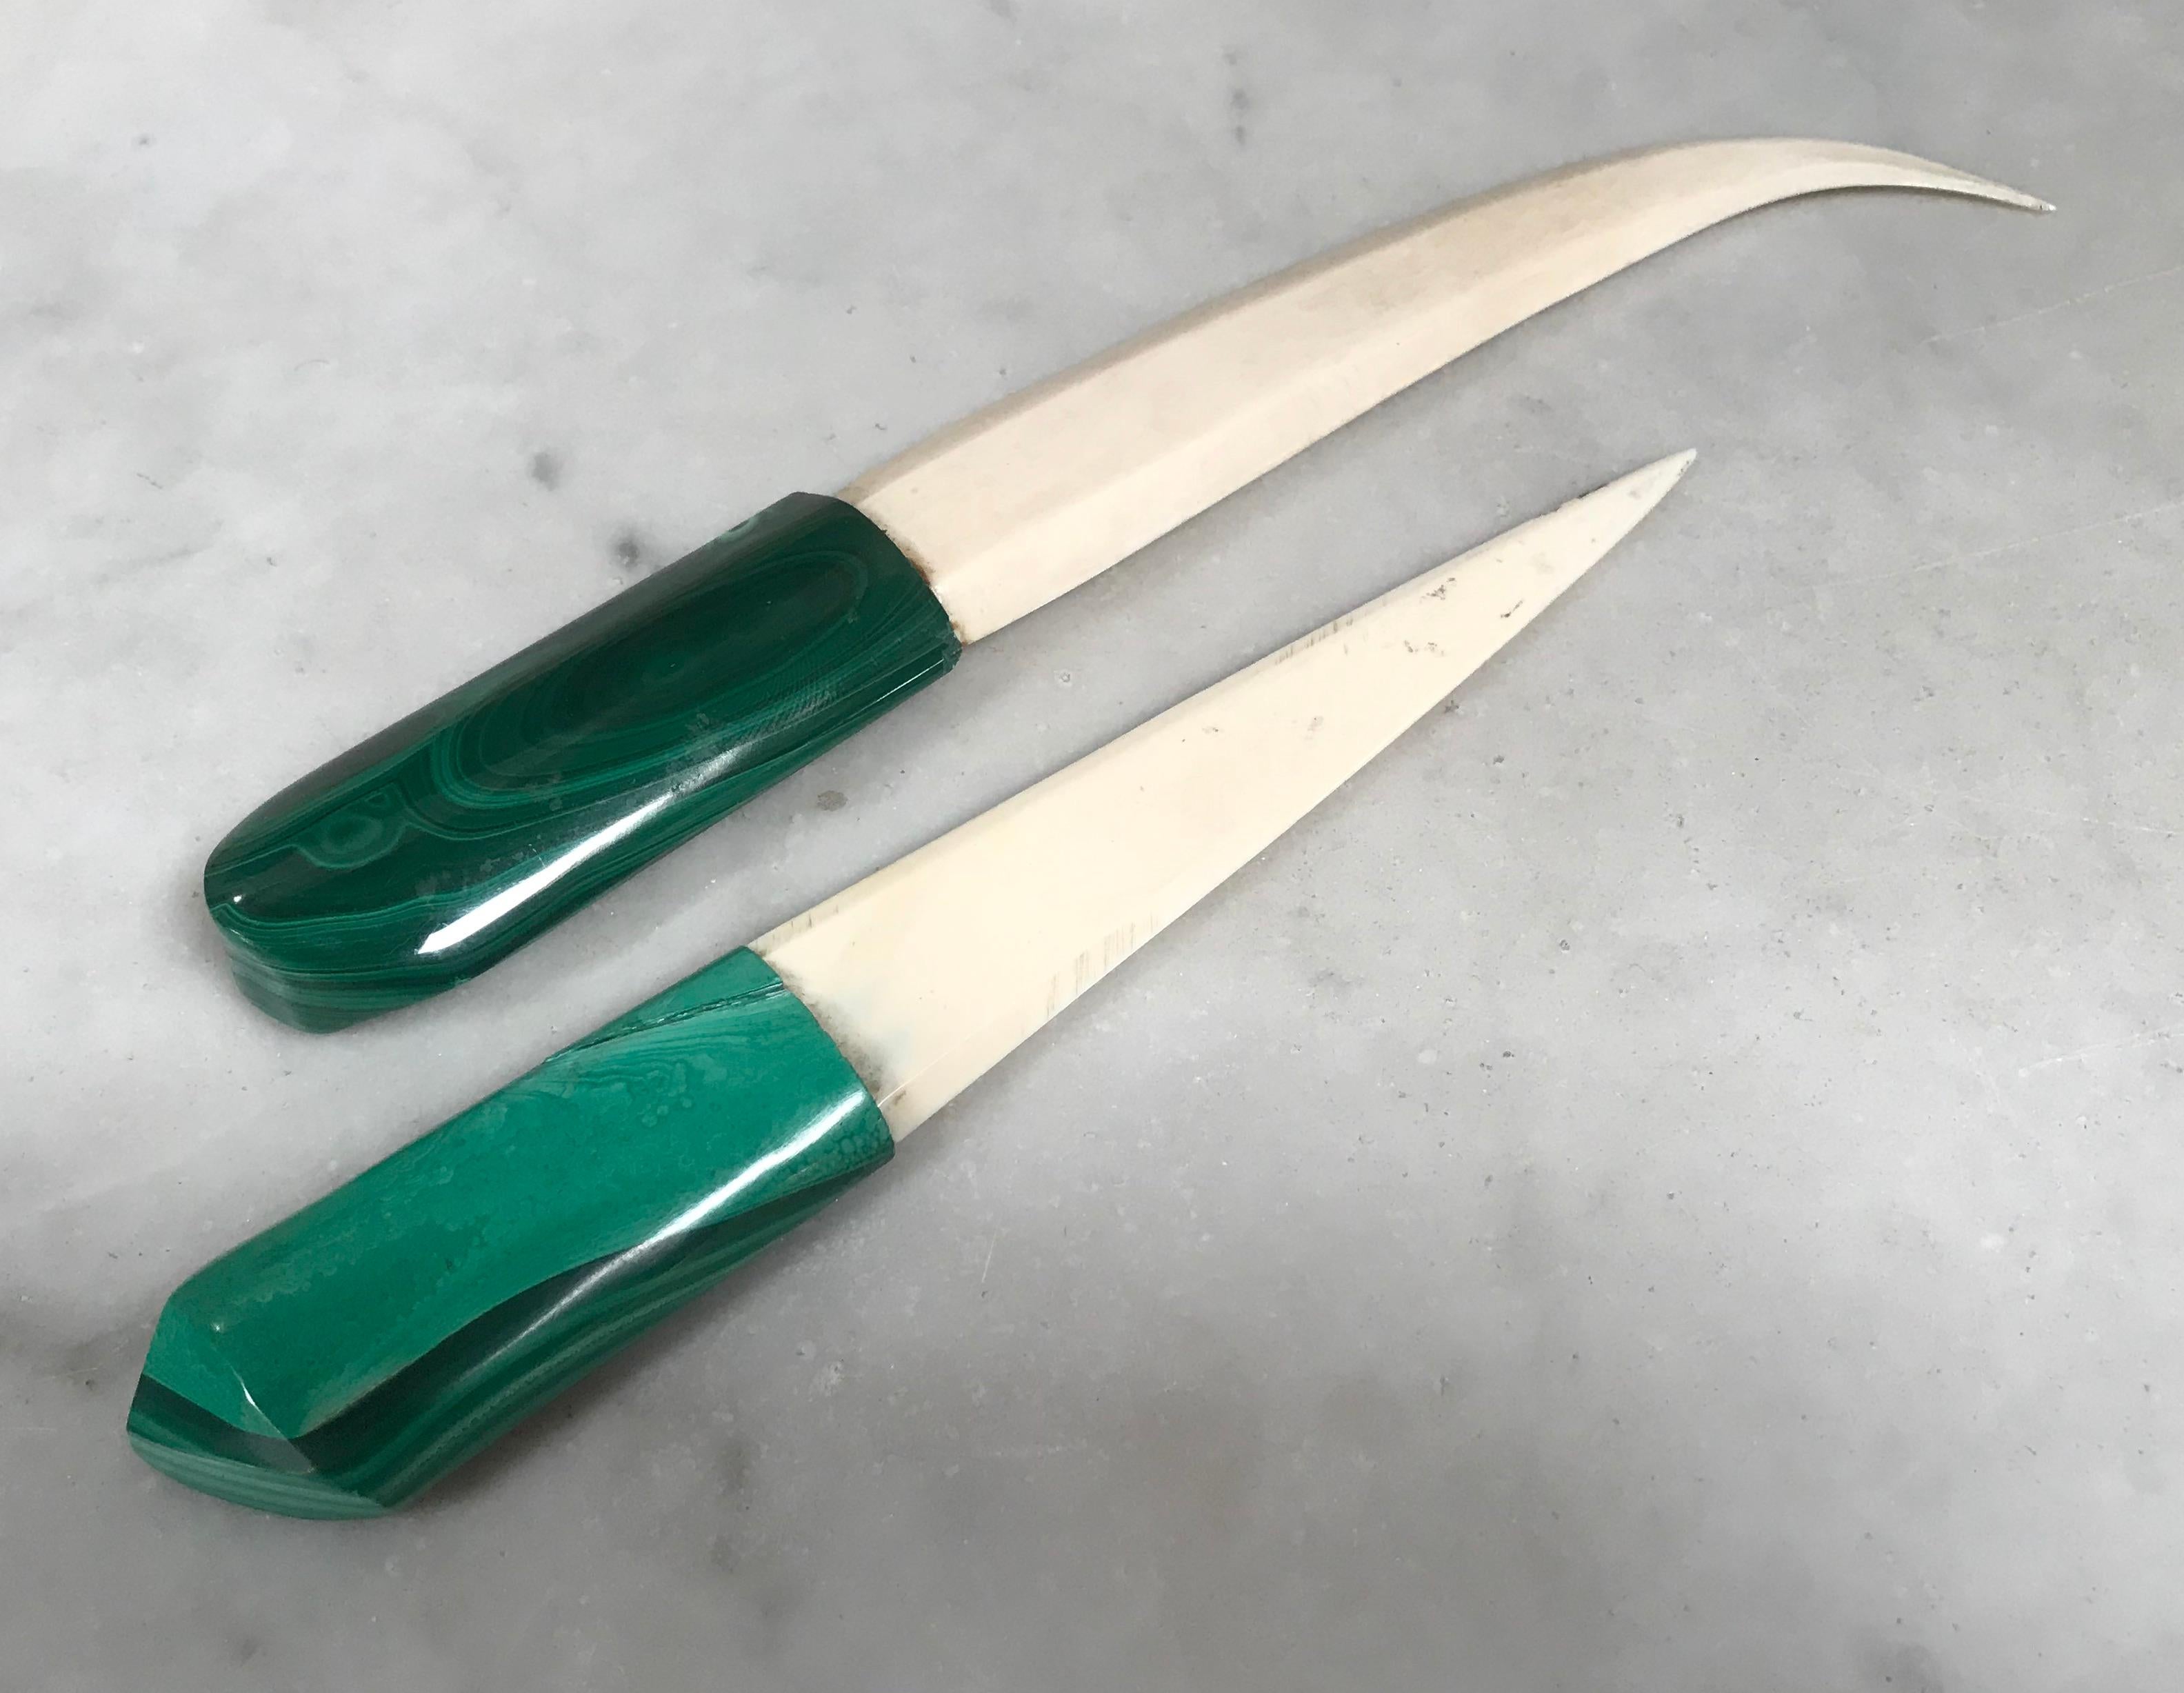 Pair of letter opener and paperknife in agate and bone, Italy, 1960s.
Dimensions:
Letter opener: W 1.5 in, D 0.3 in, H 8.5 in
Paperknife: W 1 in, D 0.3 in, H 7.